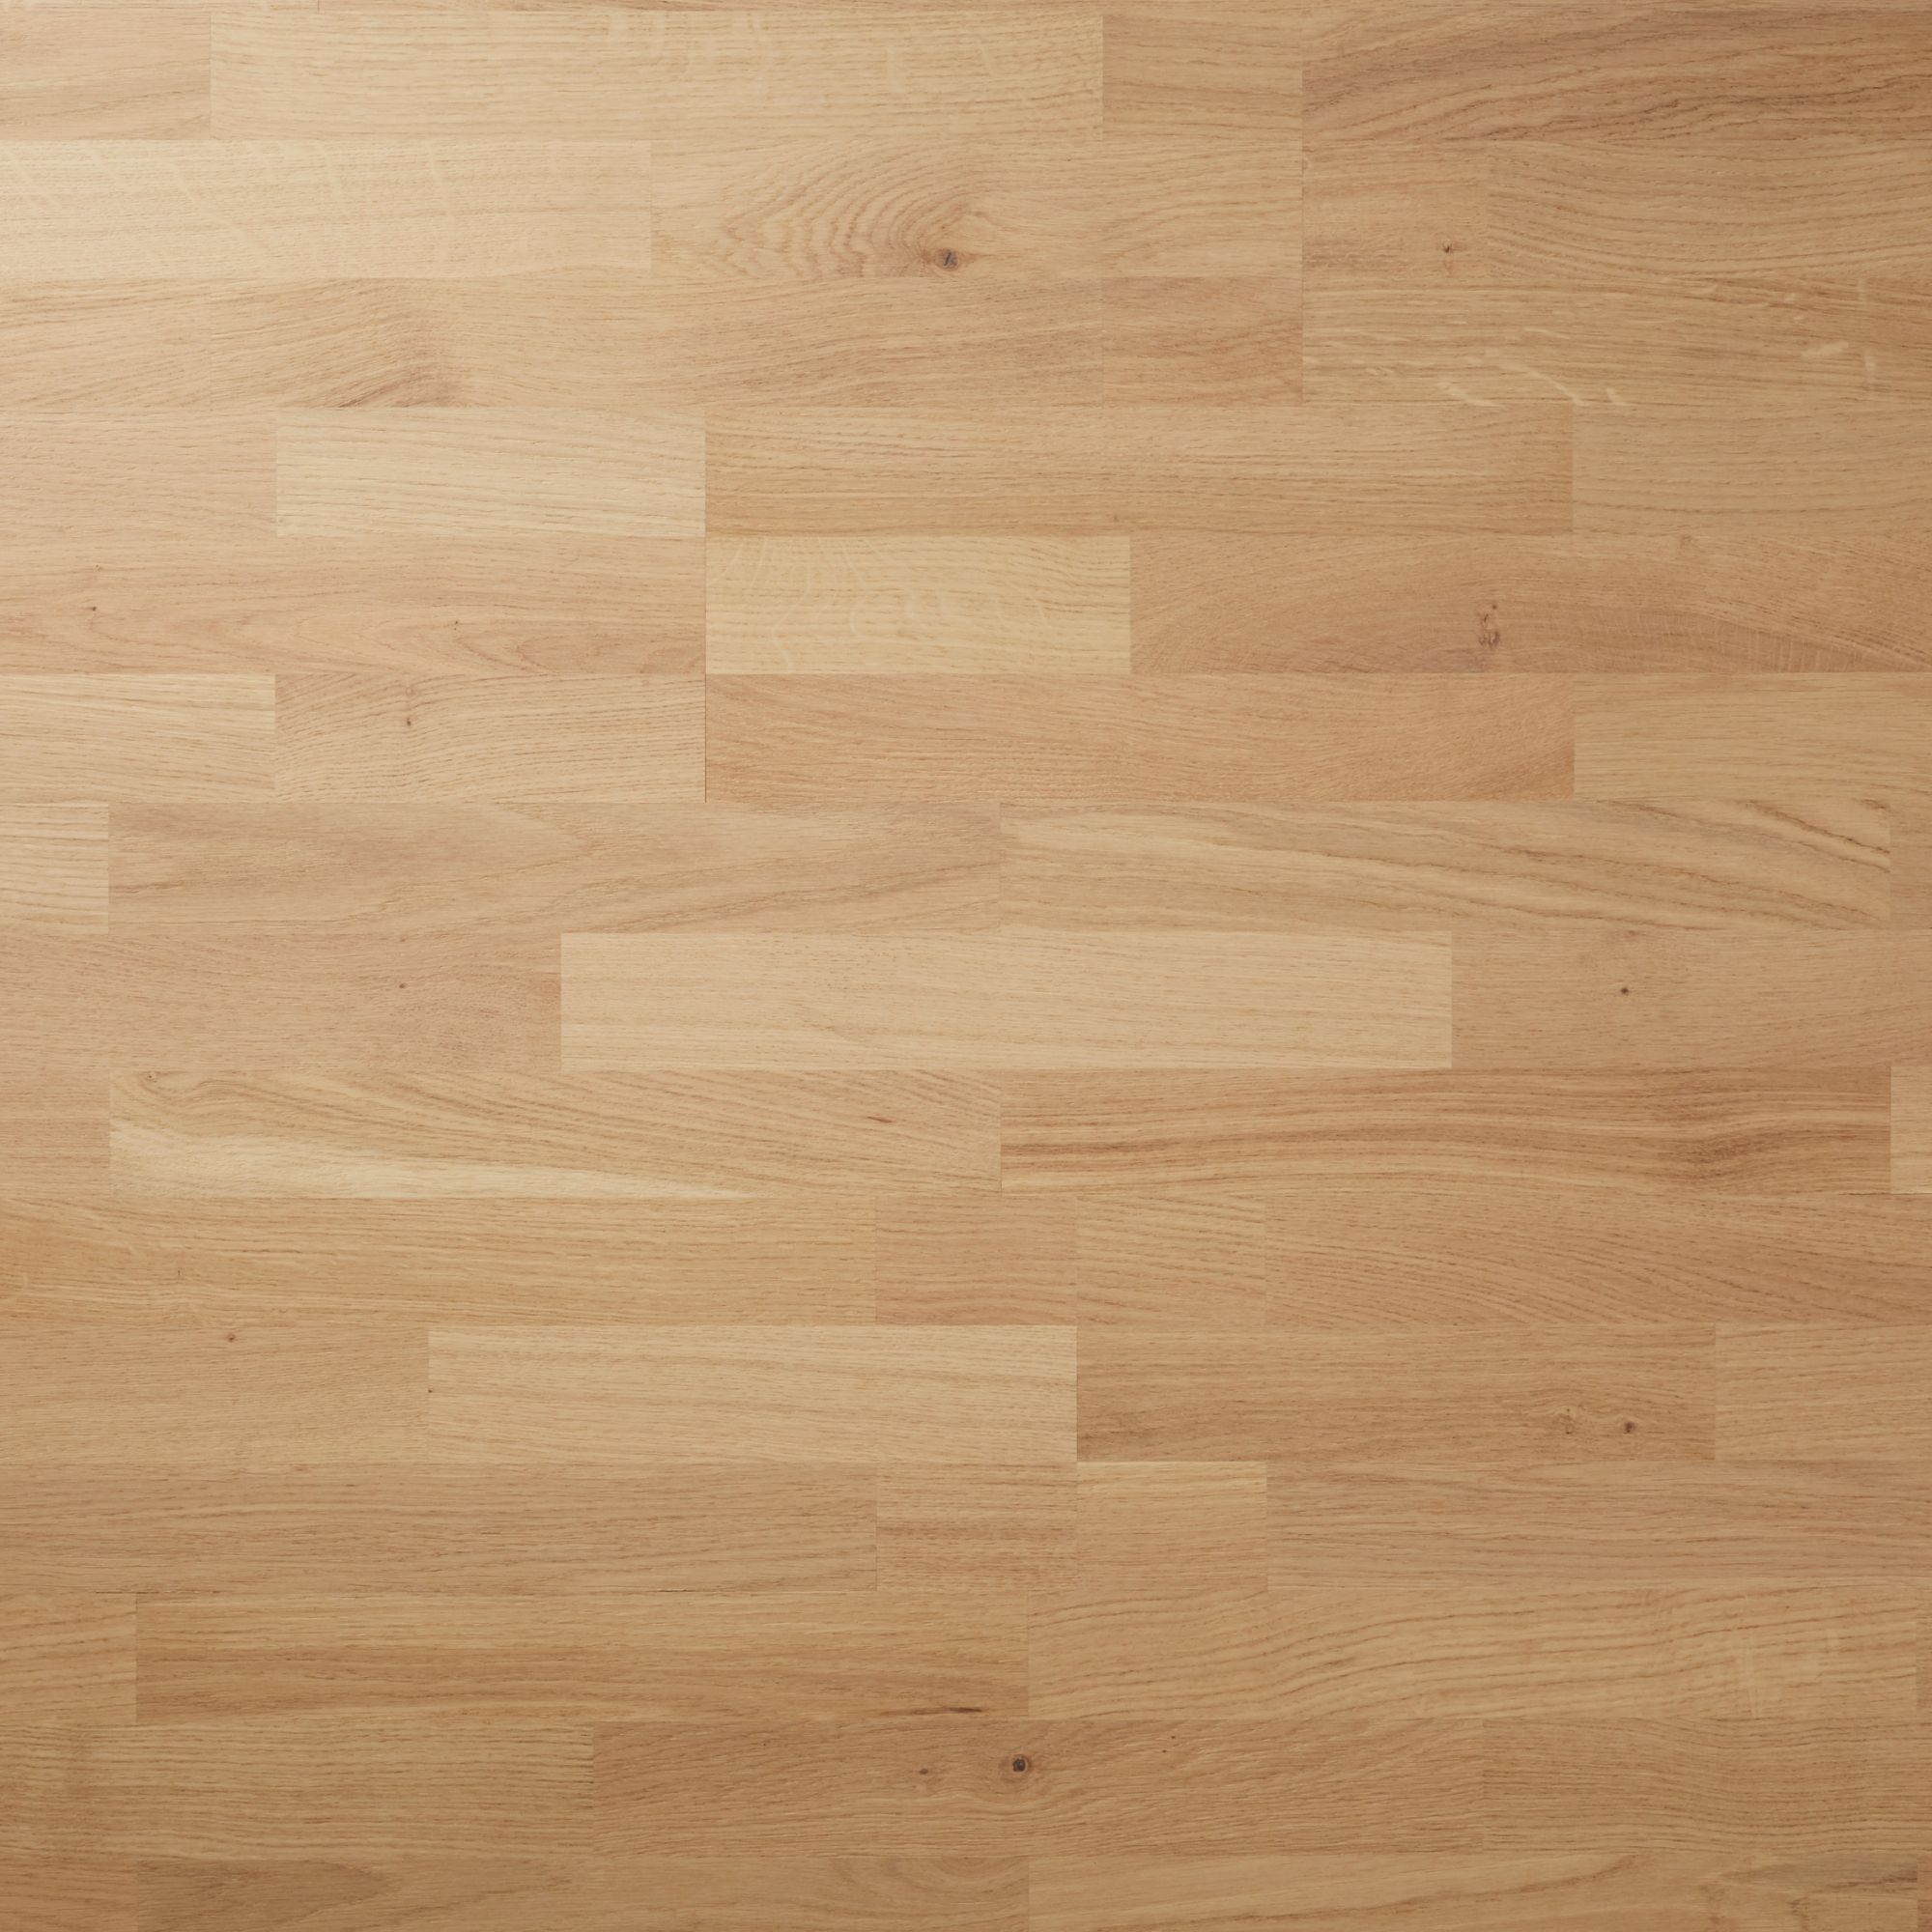 Diall Solvent Free Wood Parquet Flooring Adhesive 14kg Diy At B Q